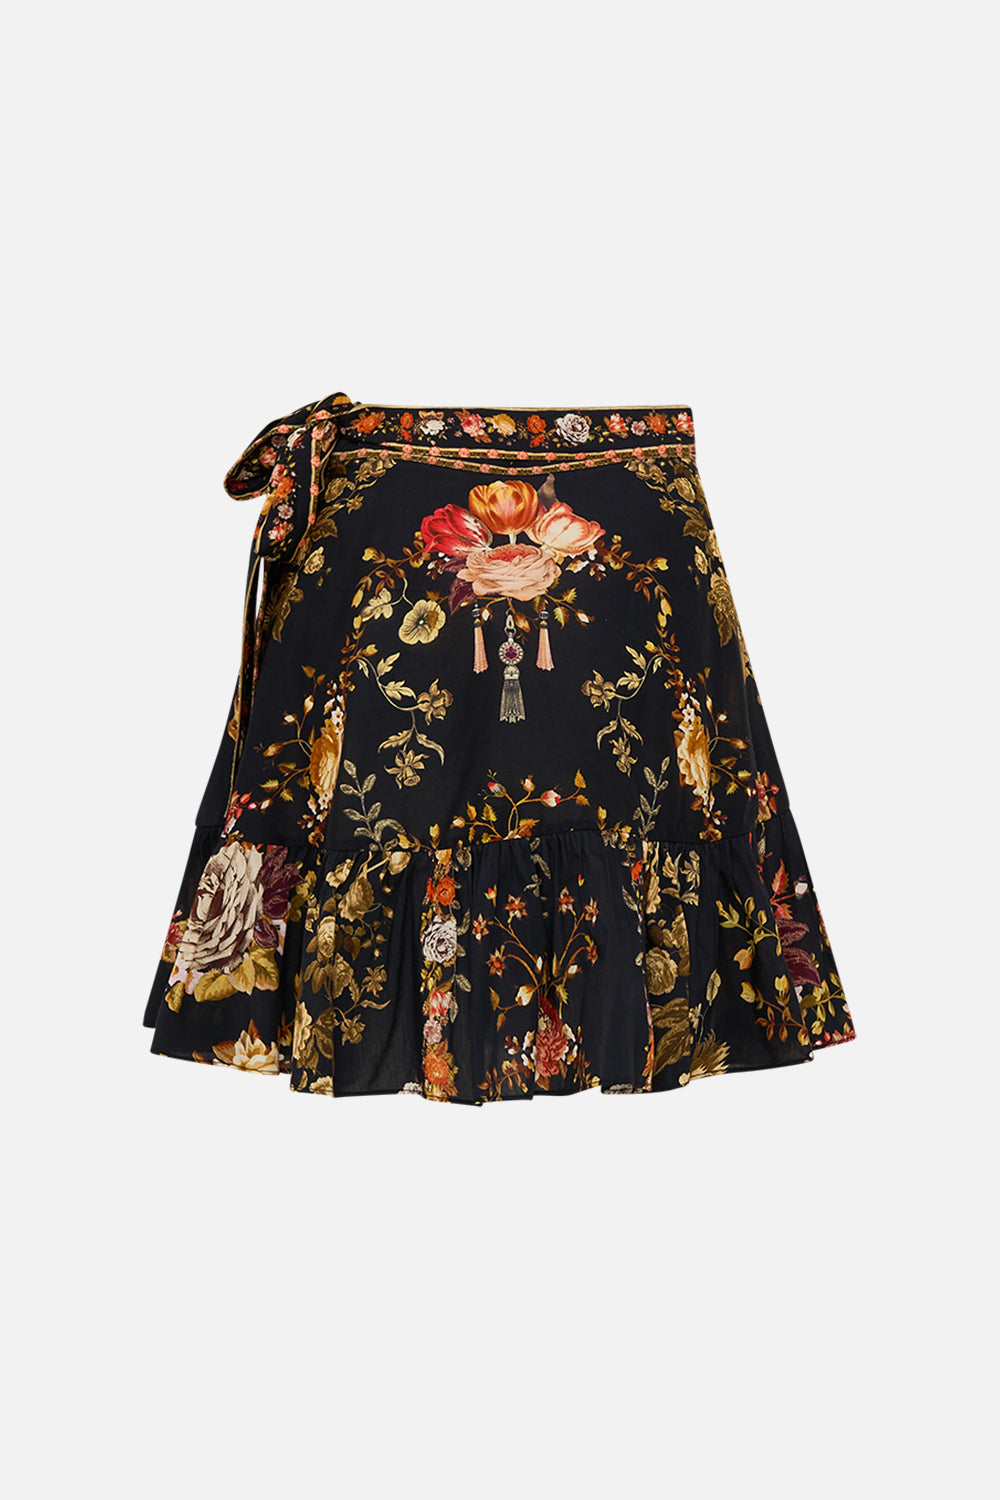 Camilla Ruffle Hem Wrap Skirt - Stitching In Time